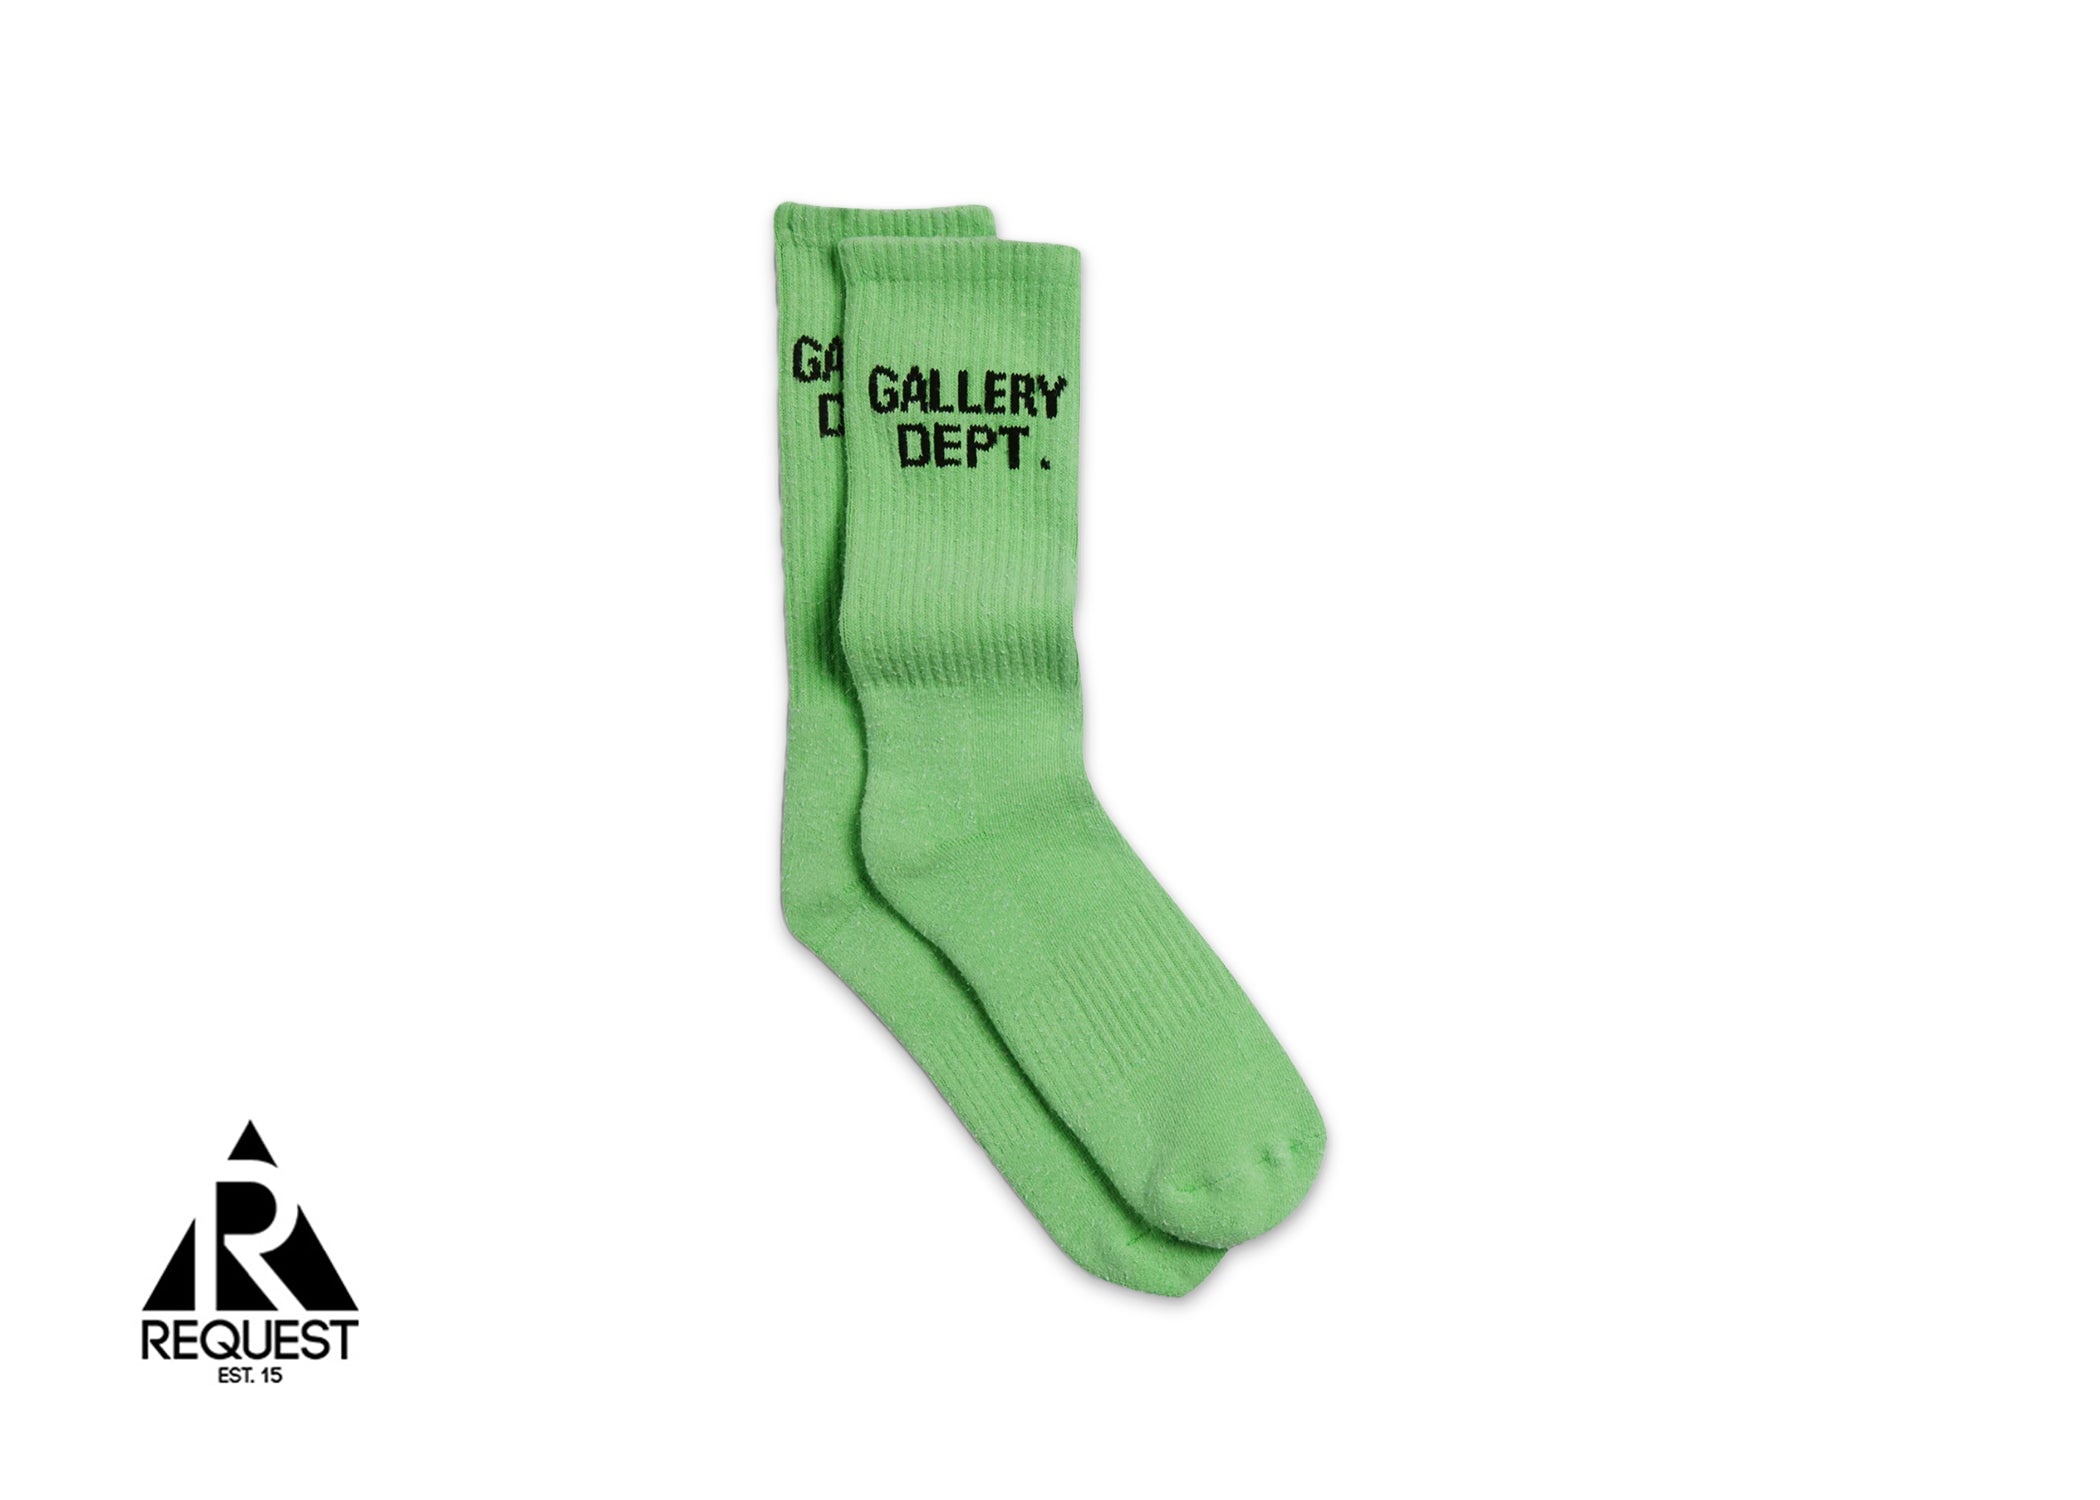 Gallery Dept. Clean Socks "Flo Green"